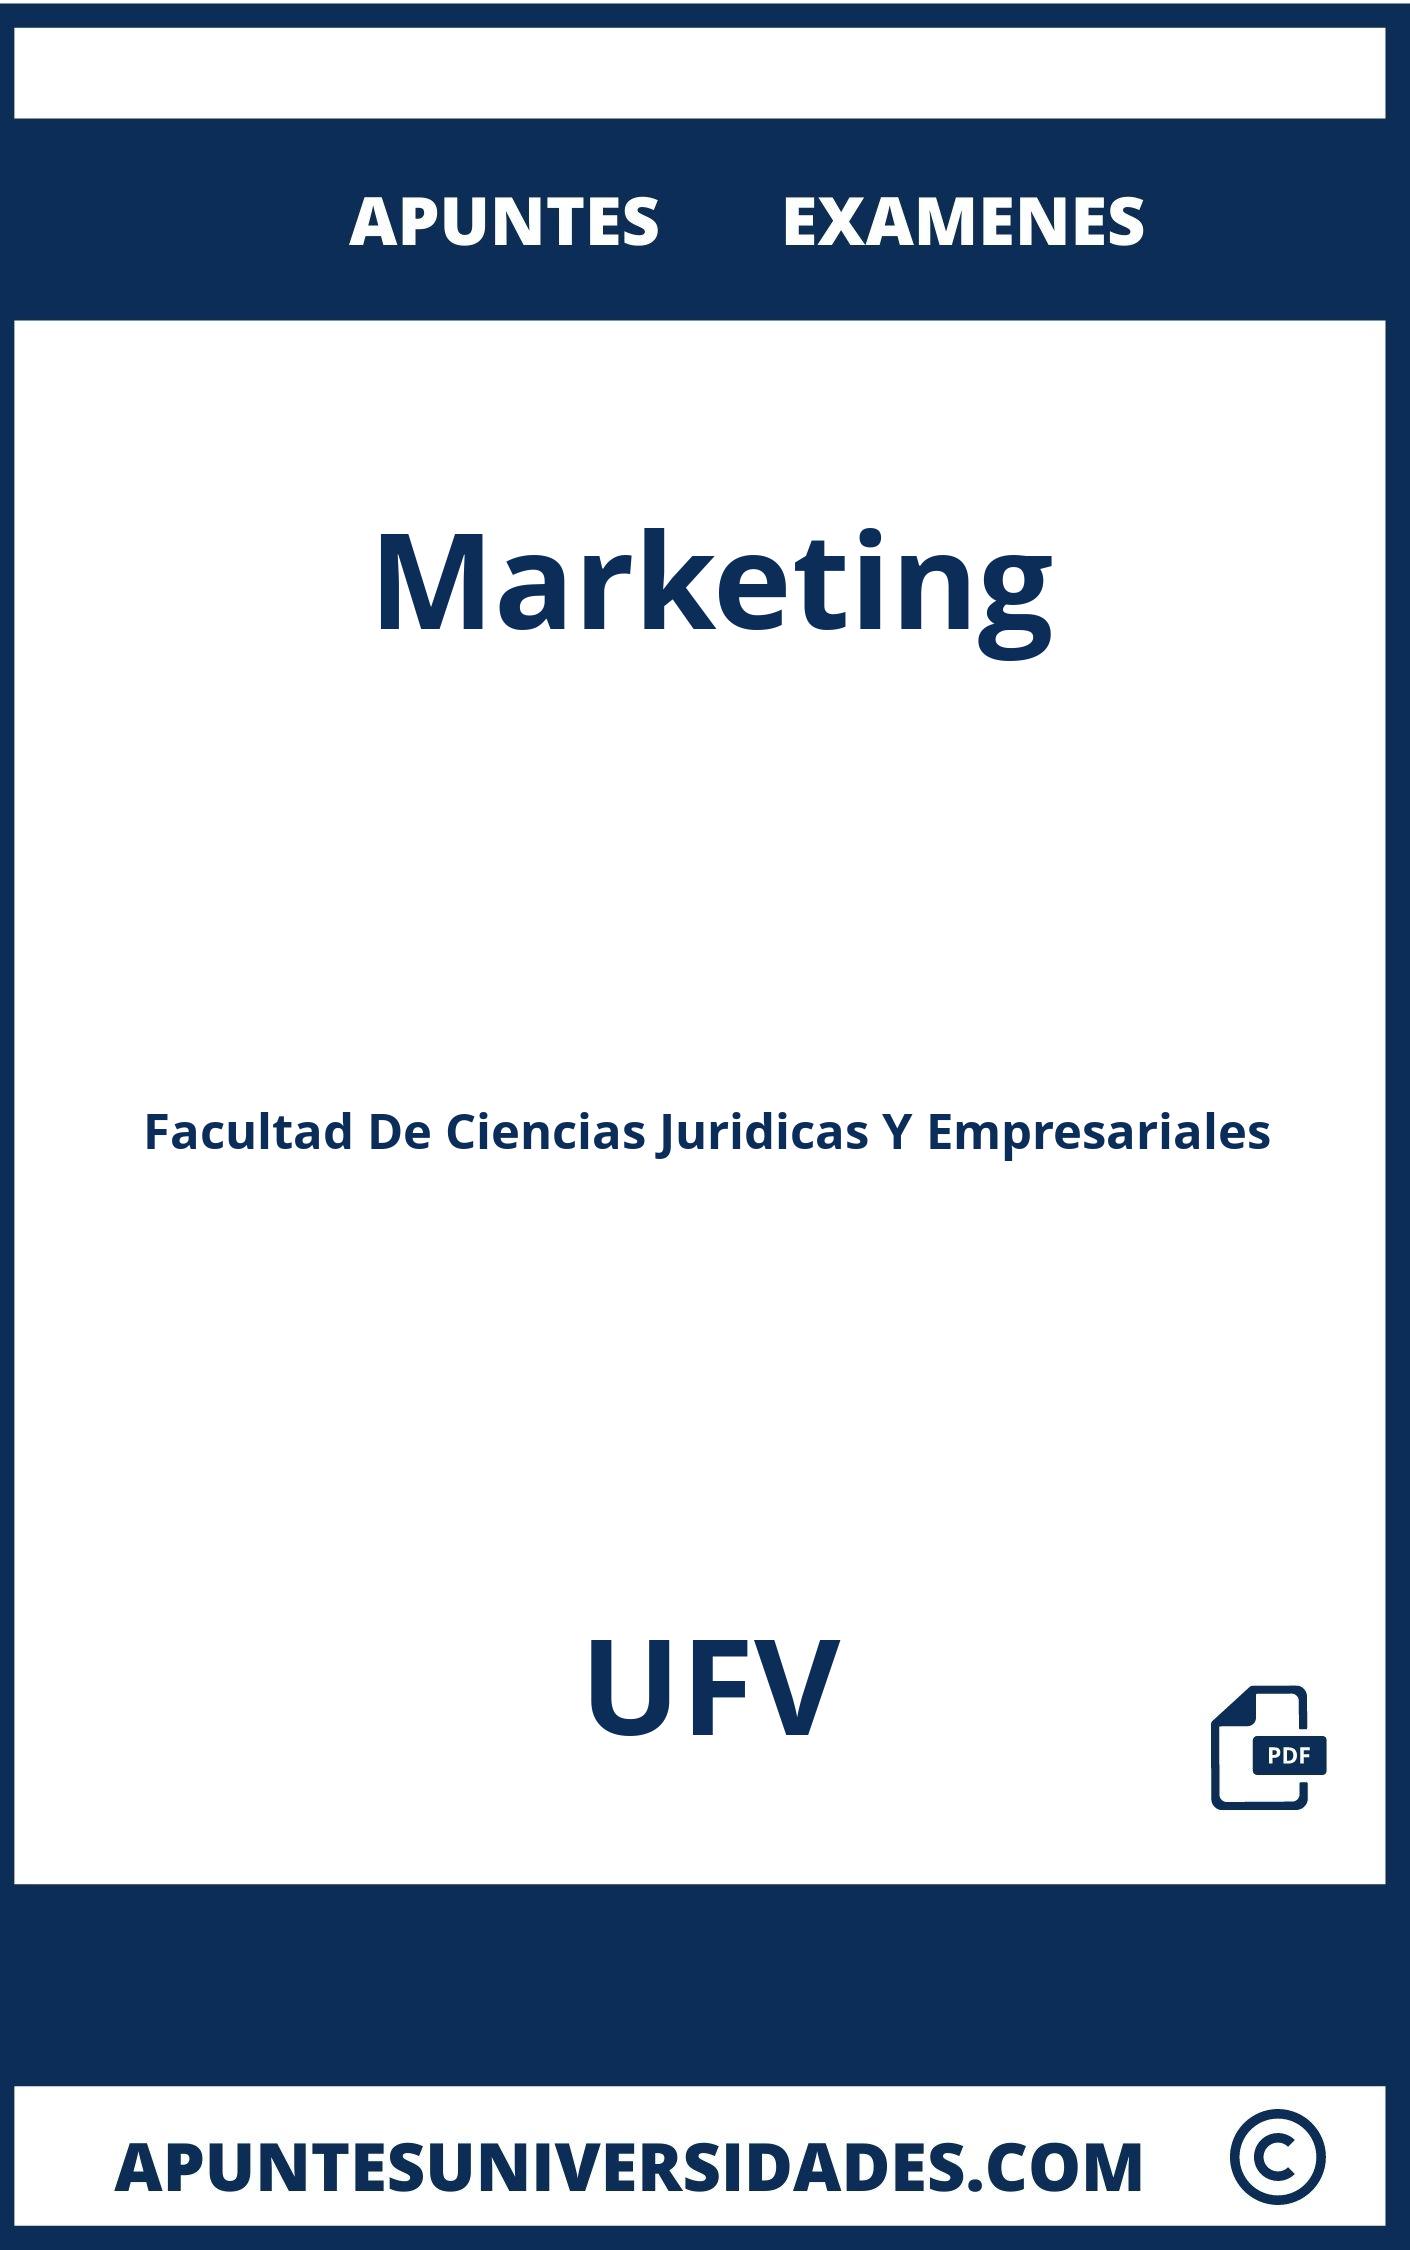 Examenes y Apuntes Marketing UFV